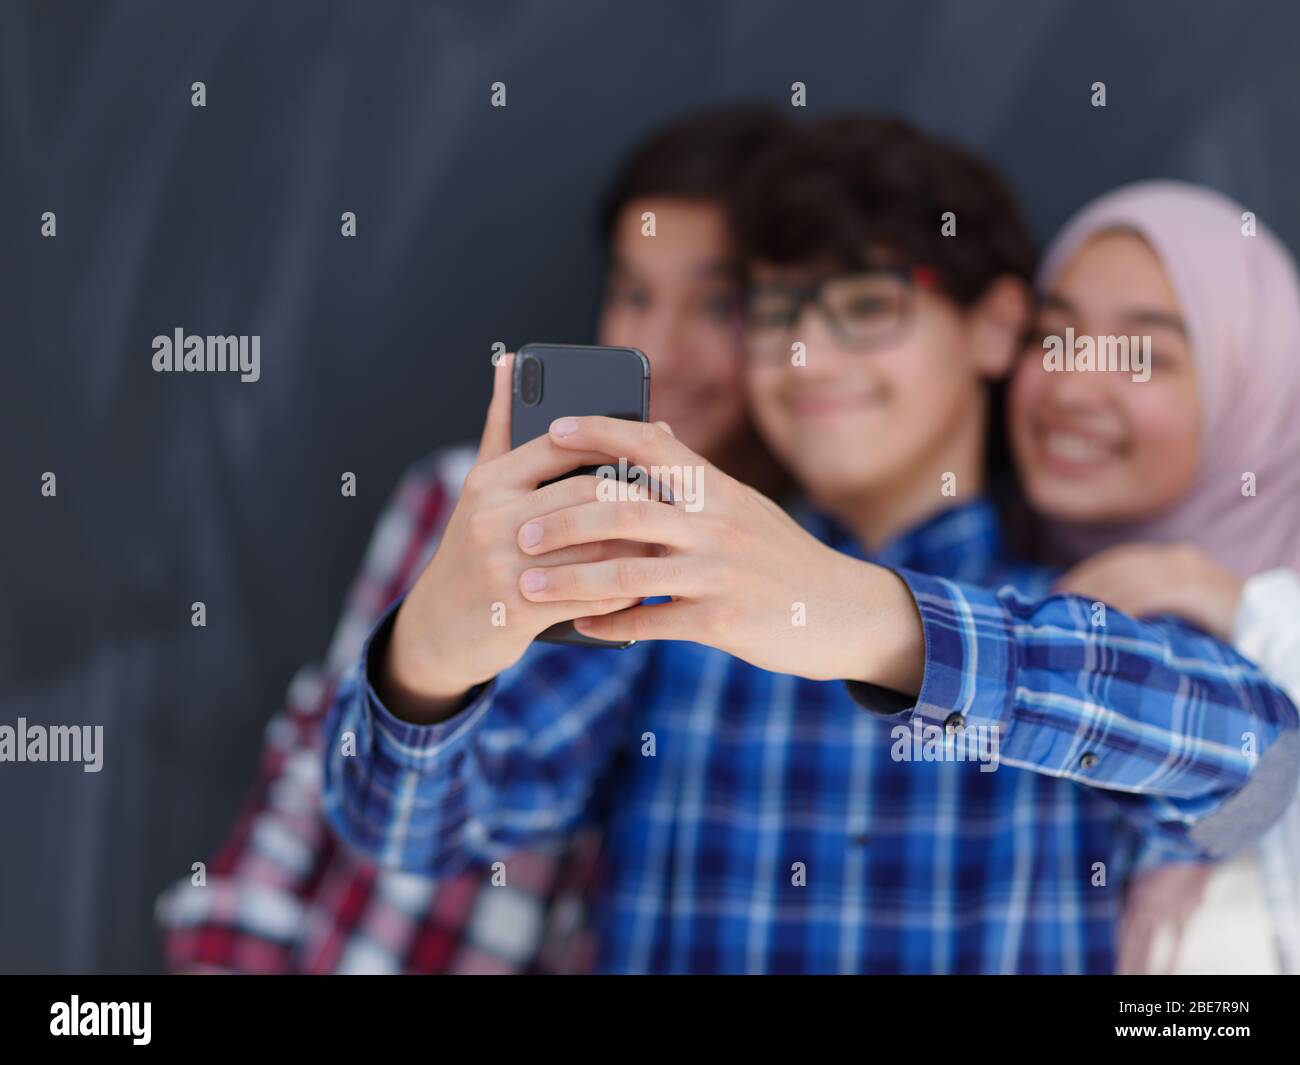 arab teen on cam hd sex photo